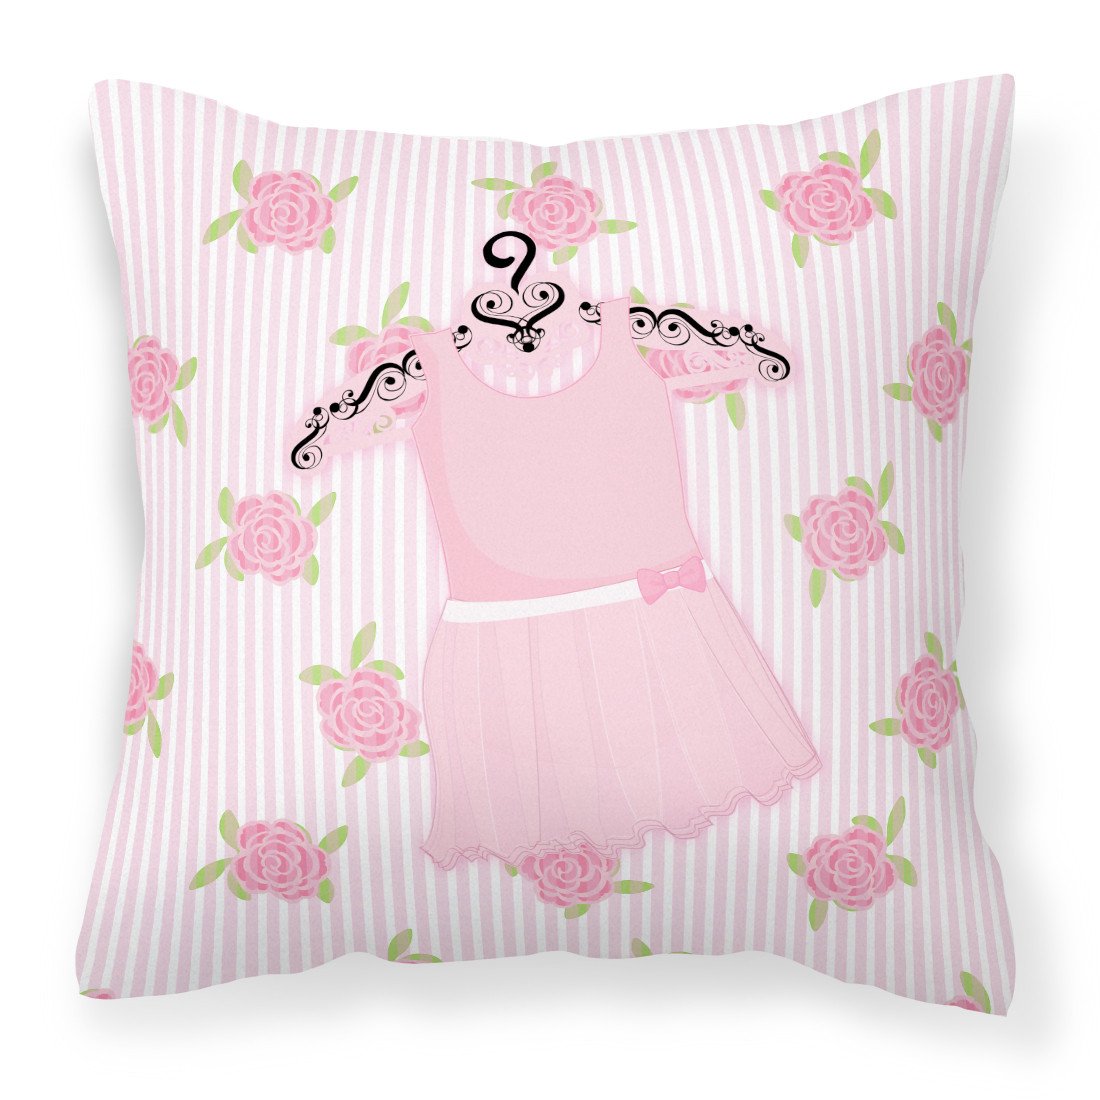 Ballerina Ballet Attire Fabric Decorative Pillow BB5158PW1818 by Caroline's Treasures